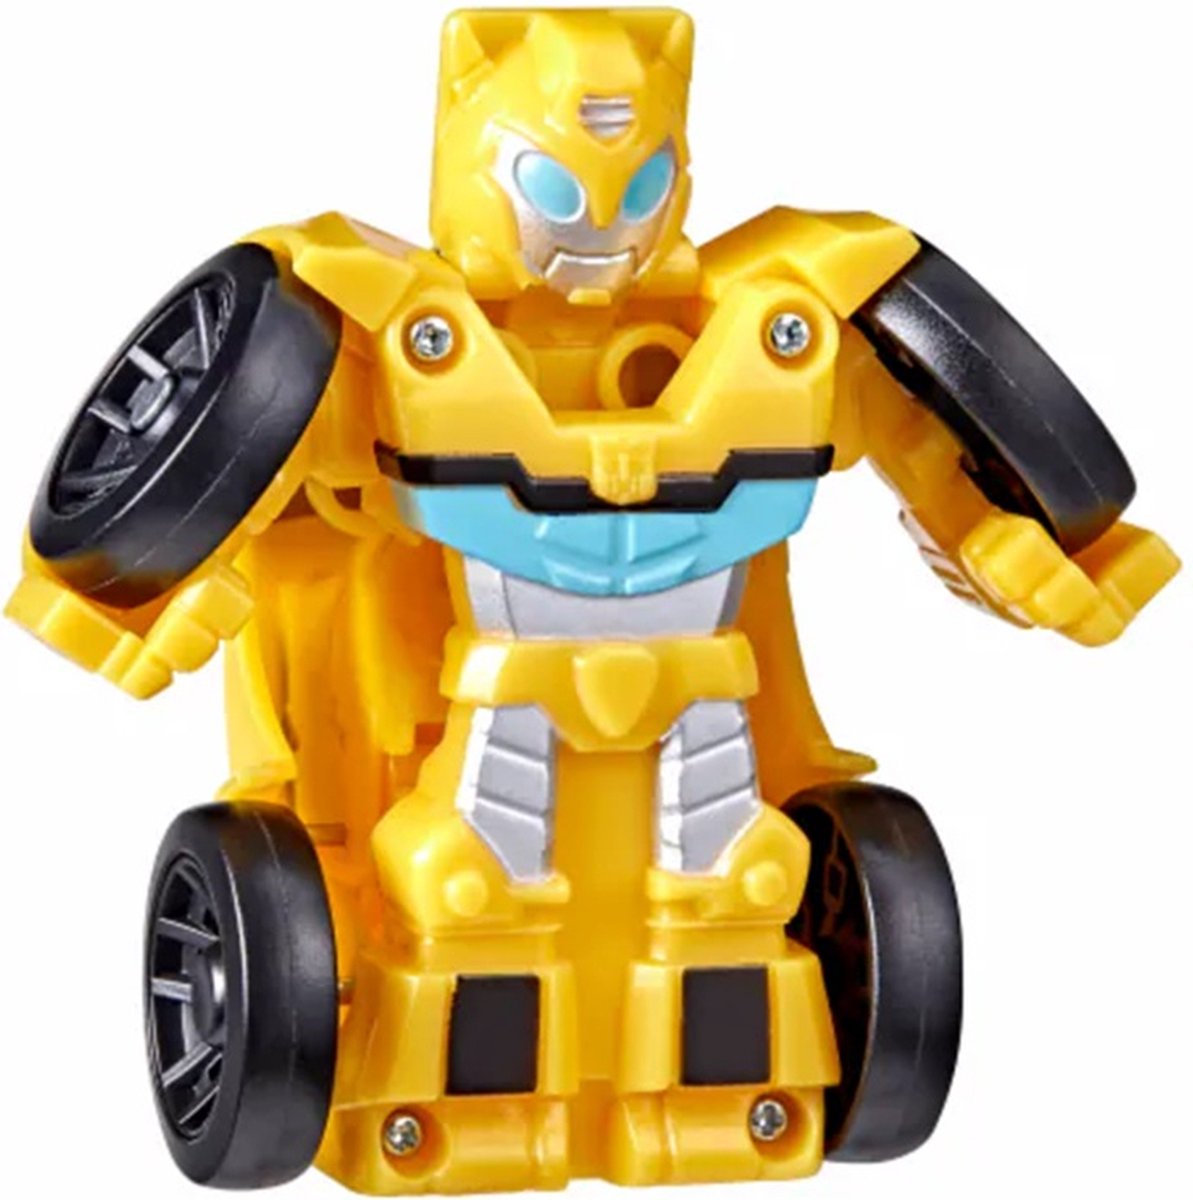 Hasbro Transformers Mini Racer Bumblebee 8 cm groot Actiefiguur Transformeerbaar